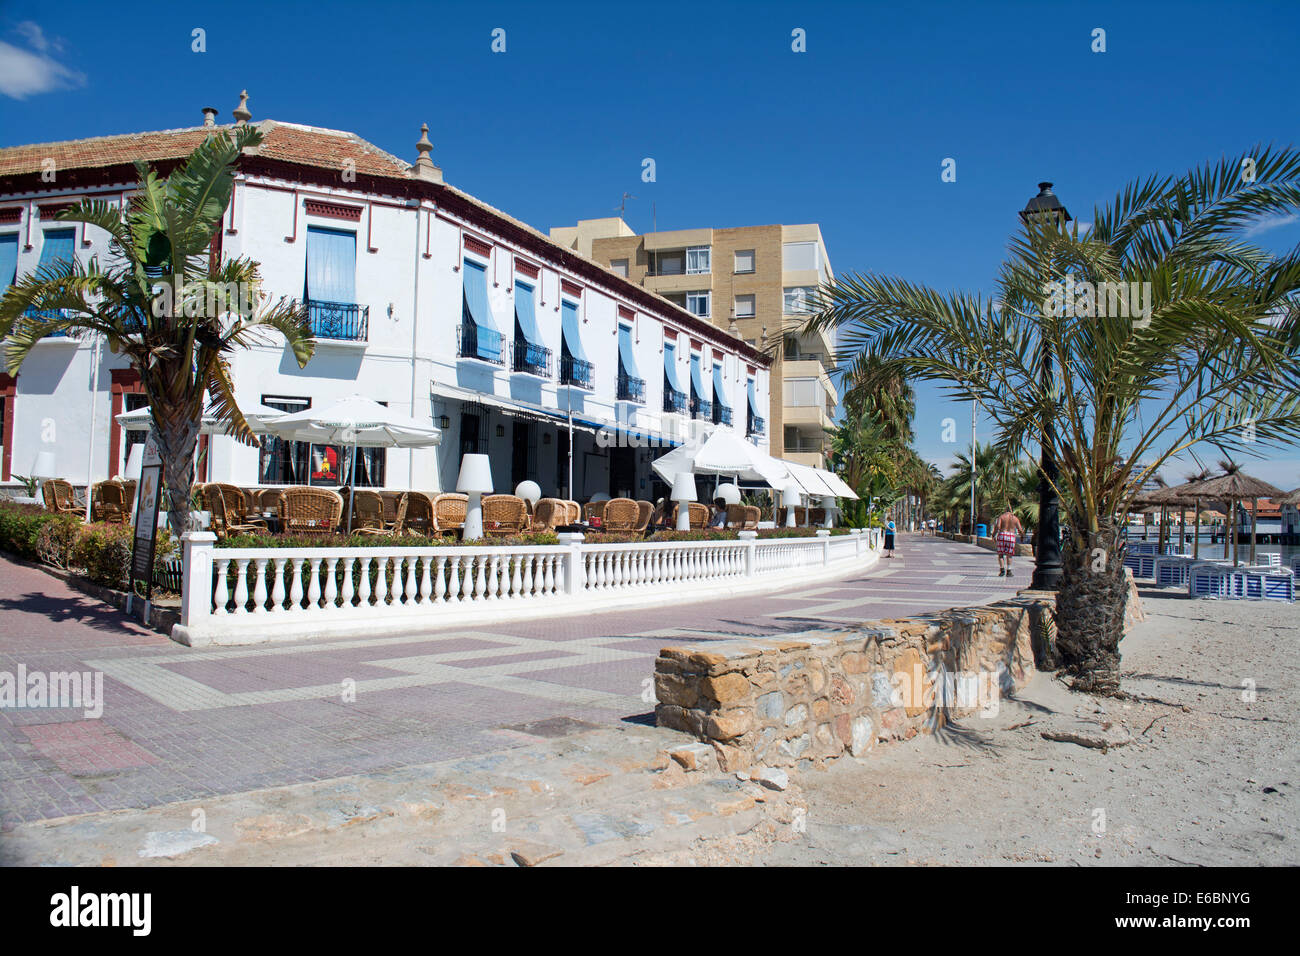 Traditional Spanish Tapas Bar and Restaurant in Los Alcazares beach Murcia, Costa Calida, South Eastern Spain Stock Photo